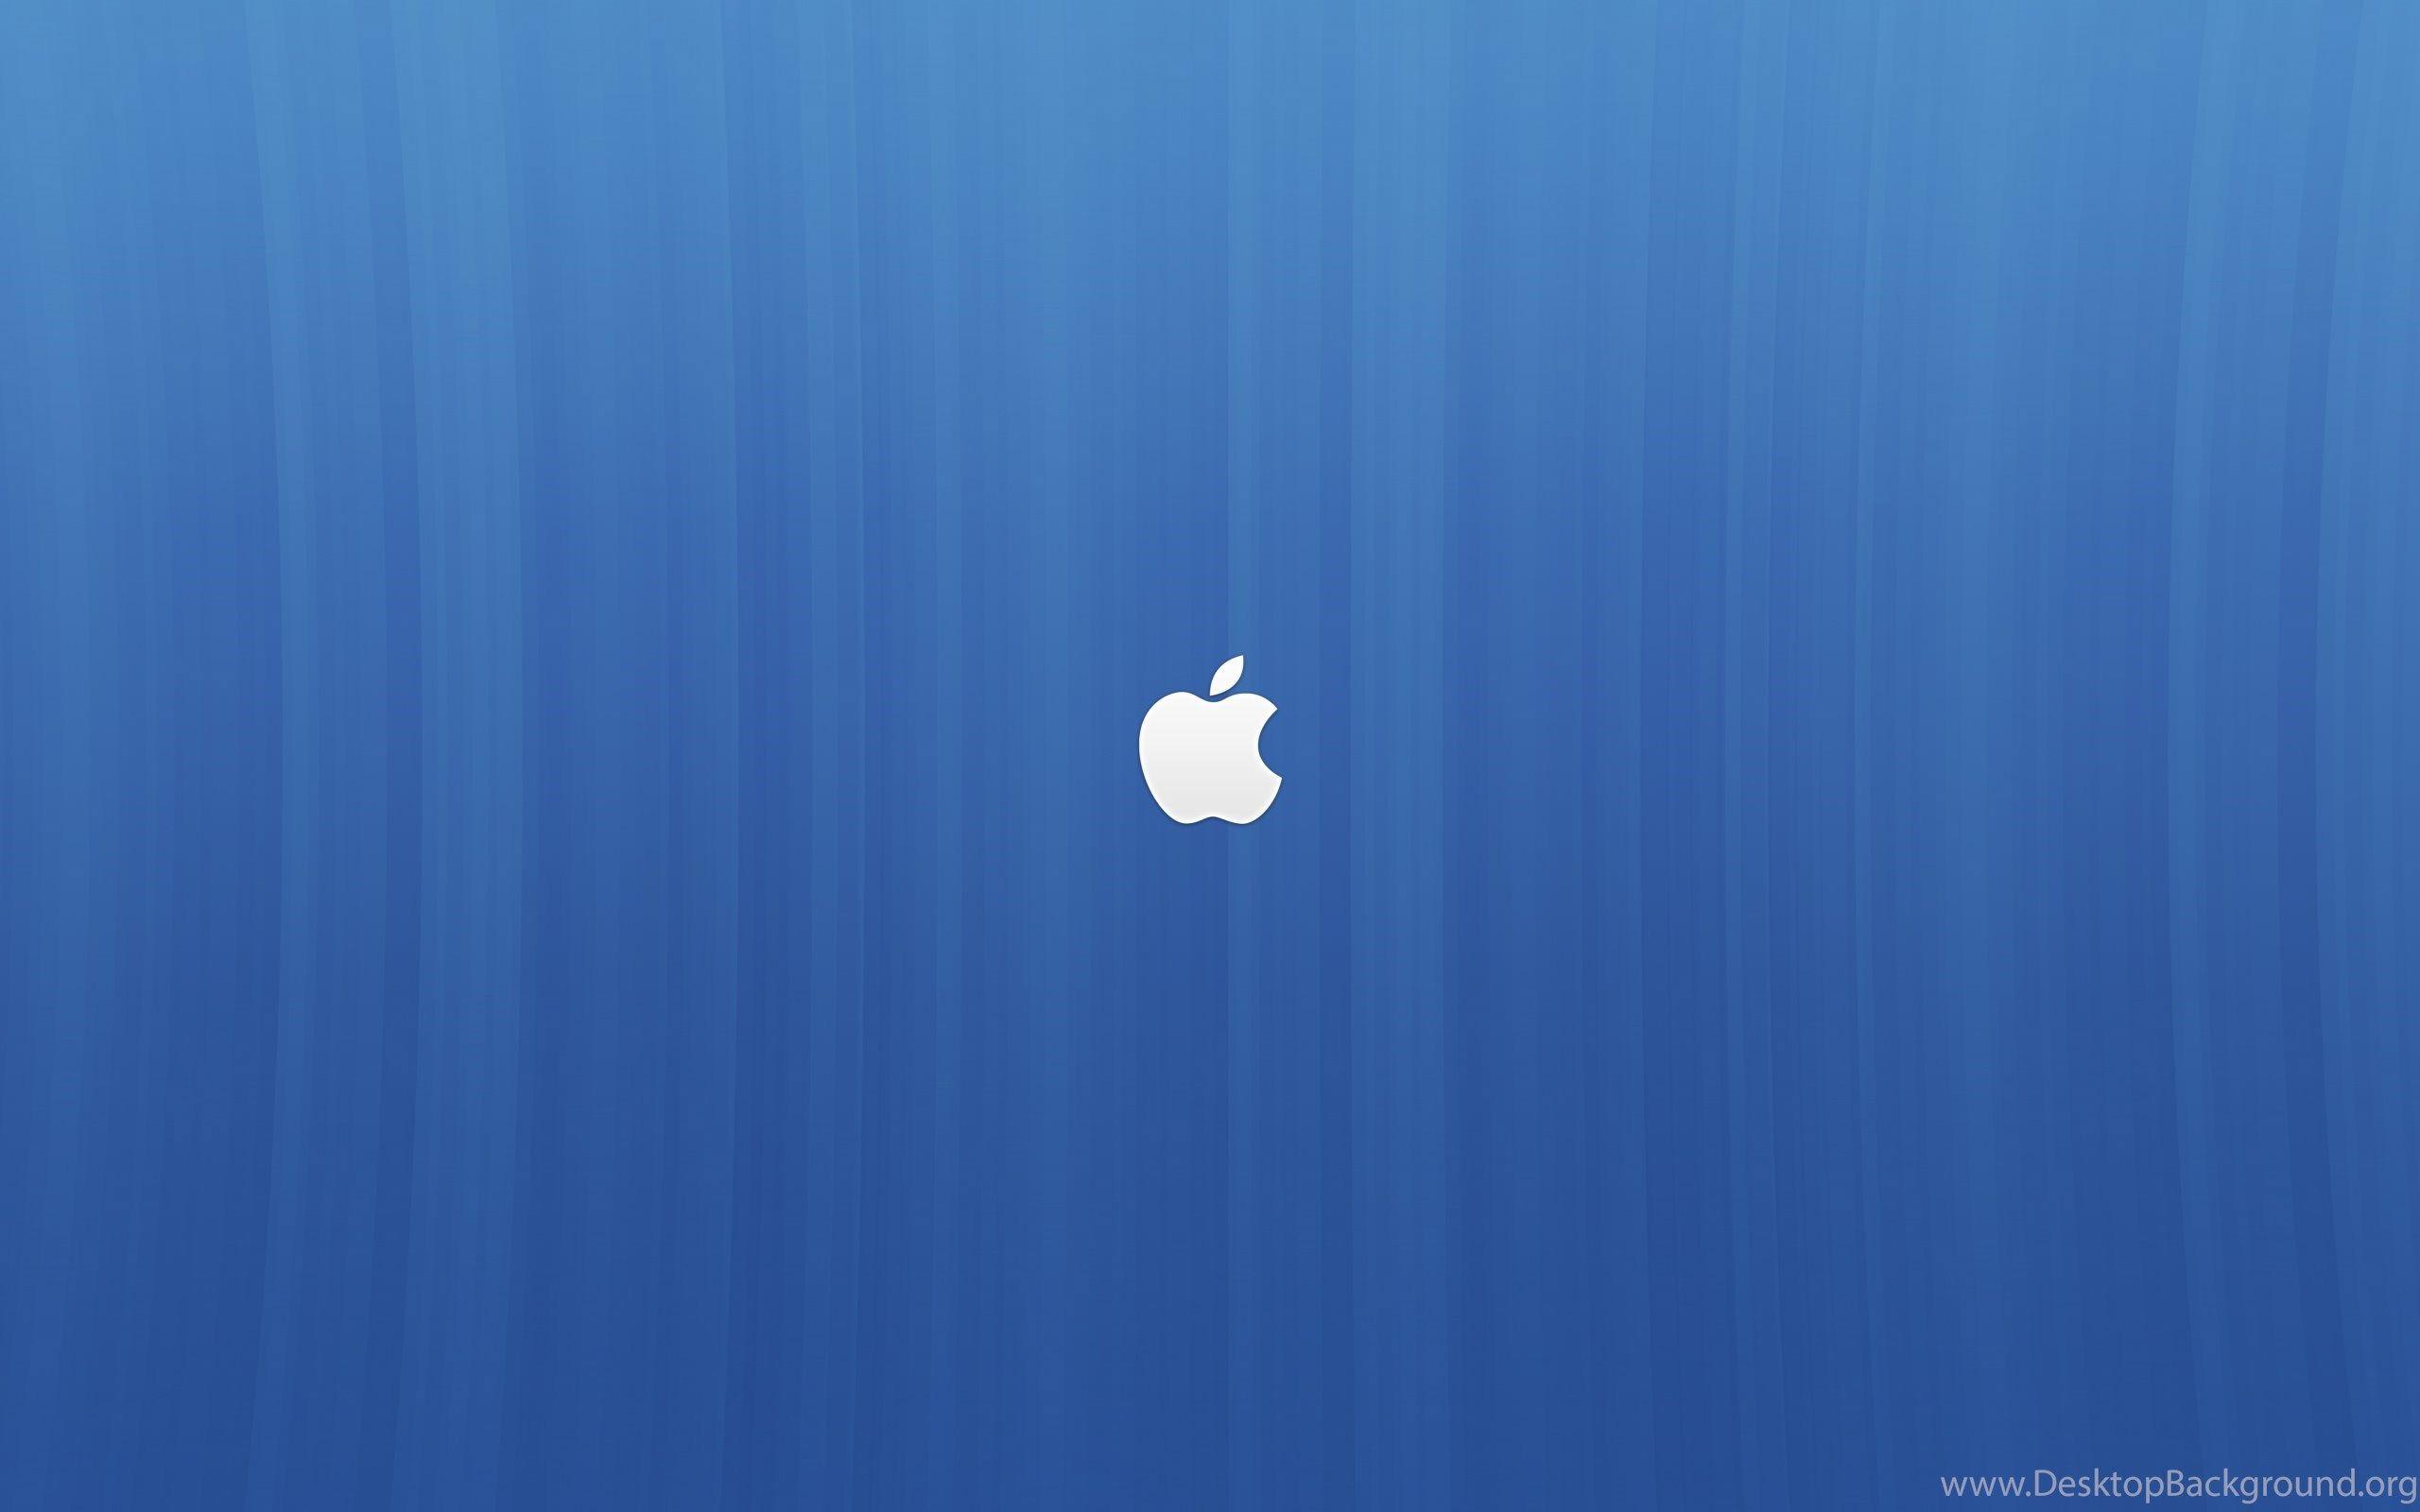 Small Apple Logo - Small Apple Logo Blue Backgrounds Wallpapers Desktop Background